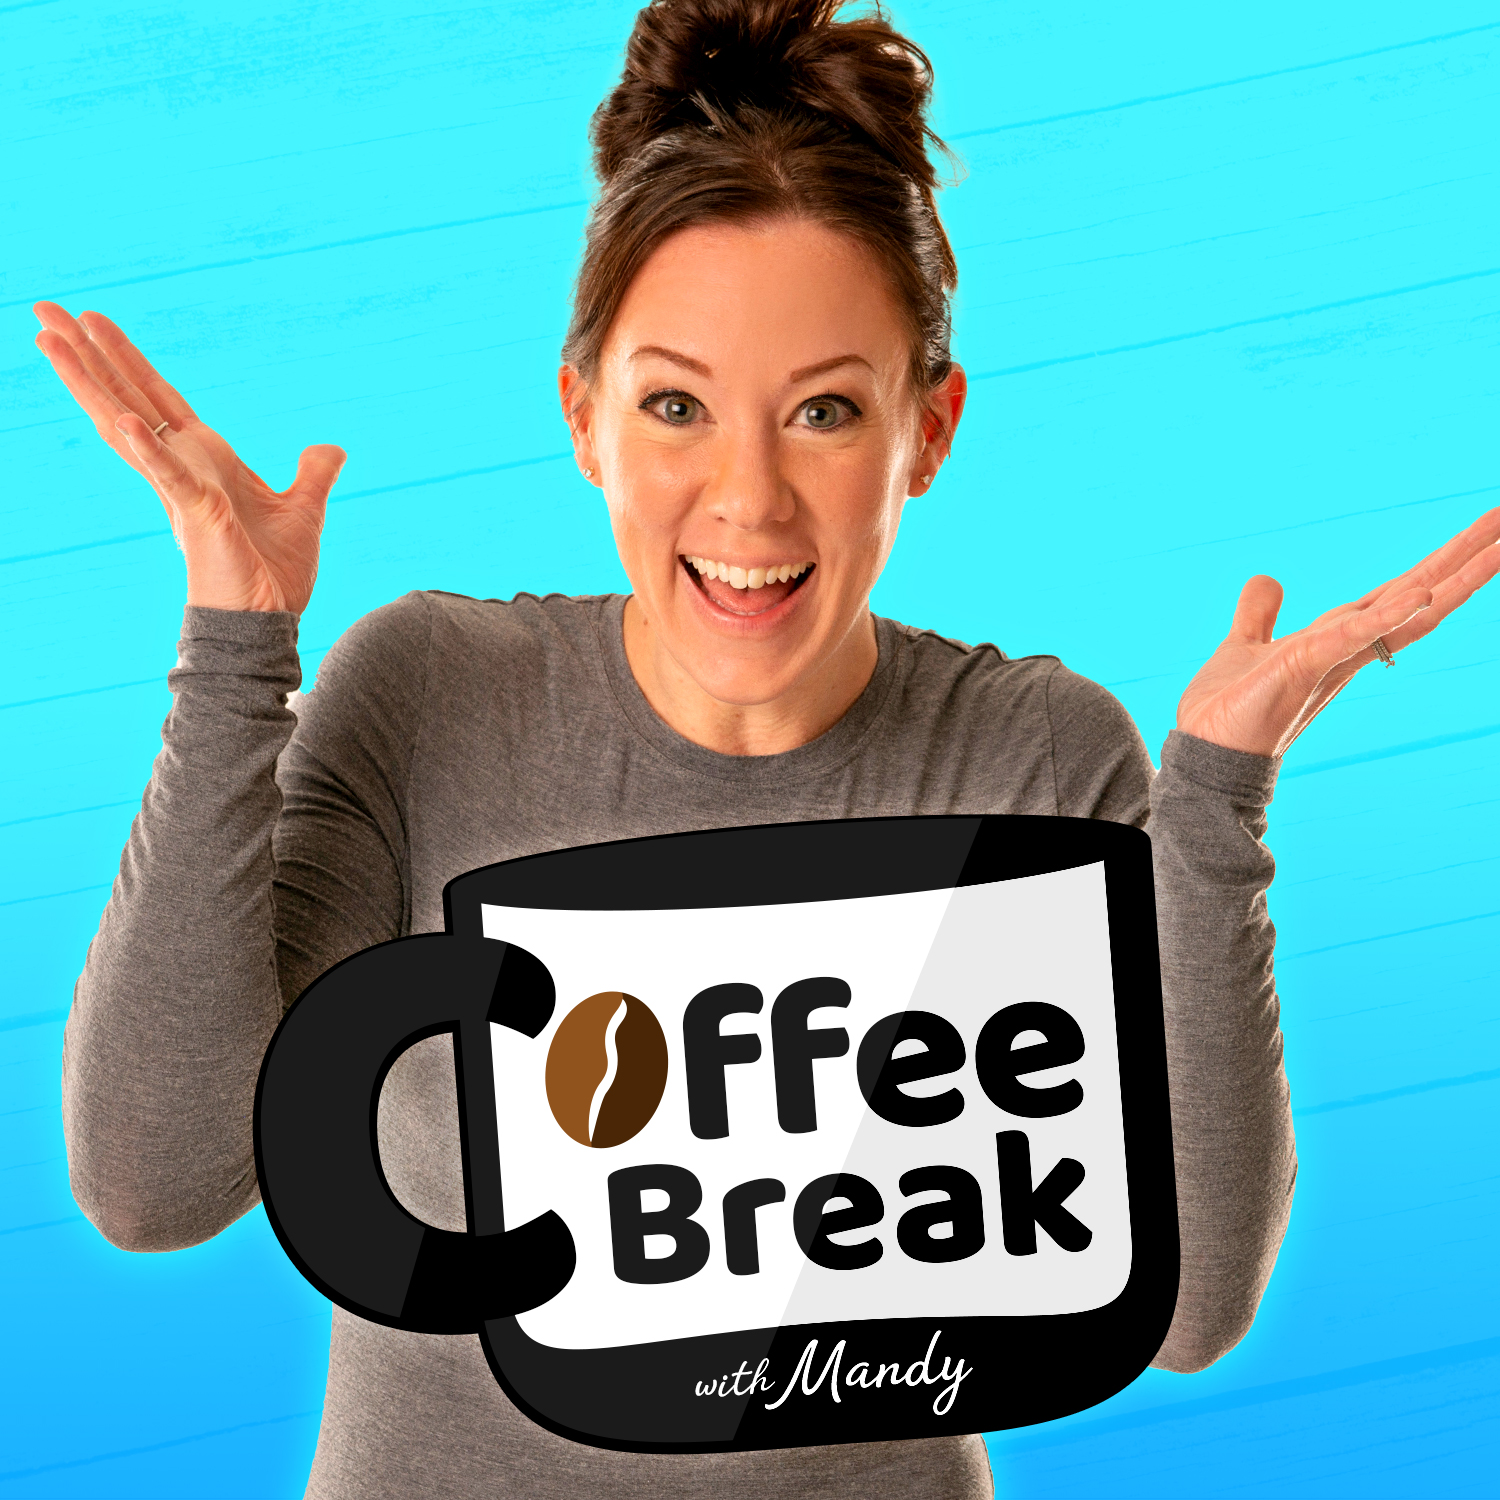 Coffee Break with Mandy